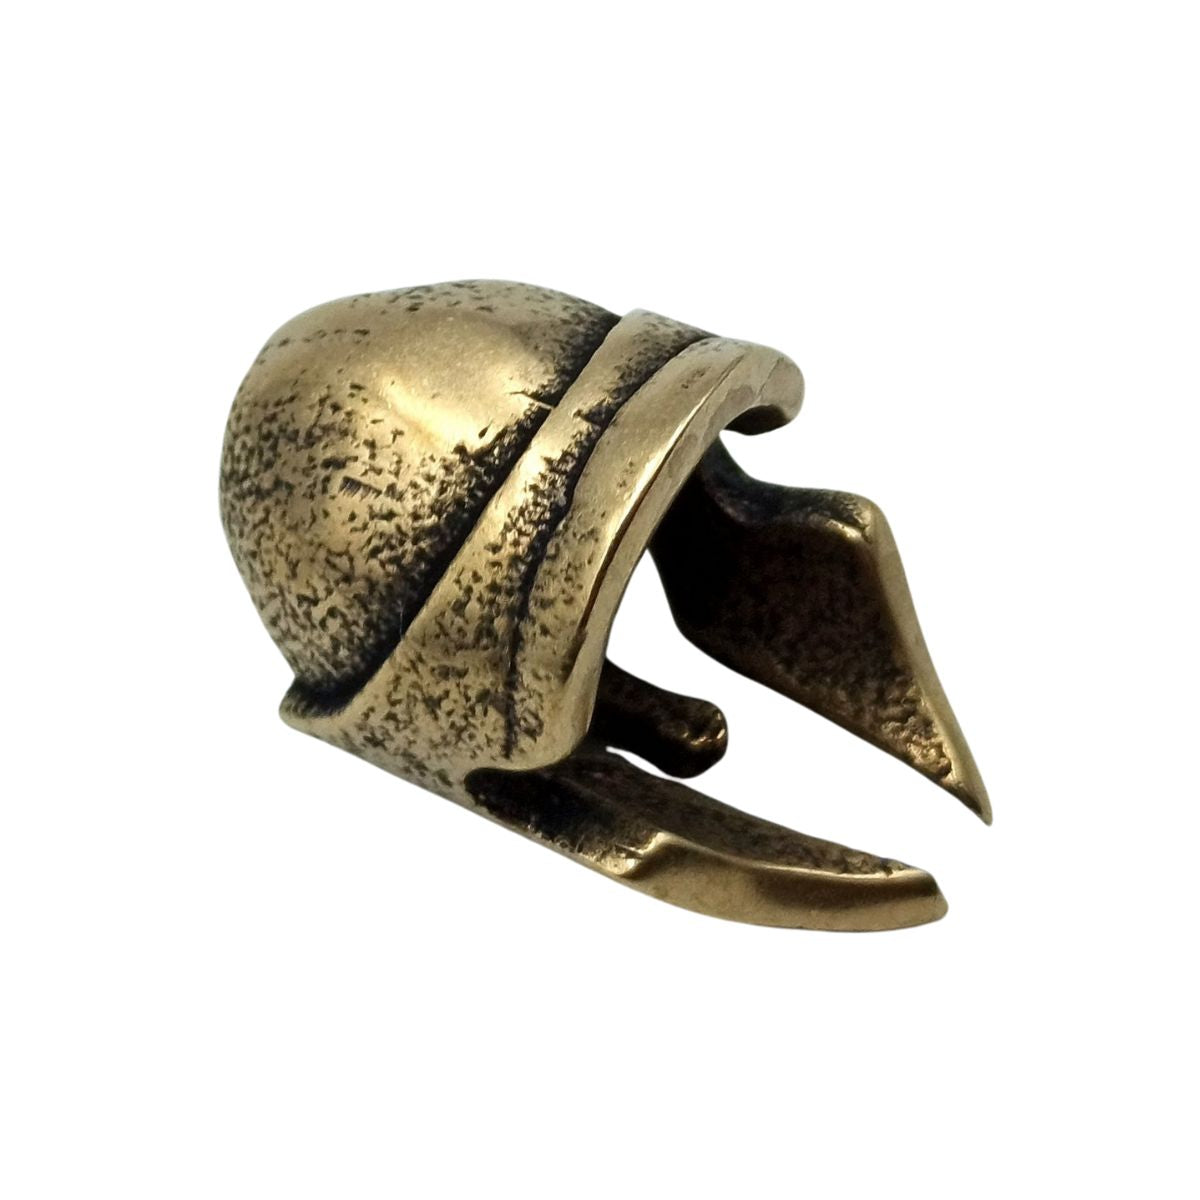 Spartan helmet paracord bead